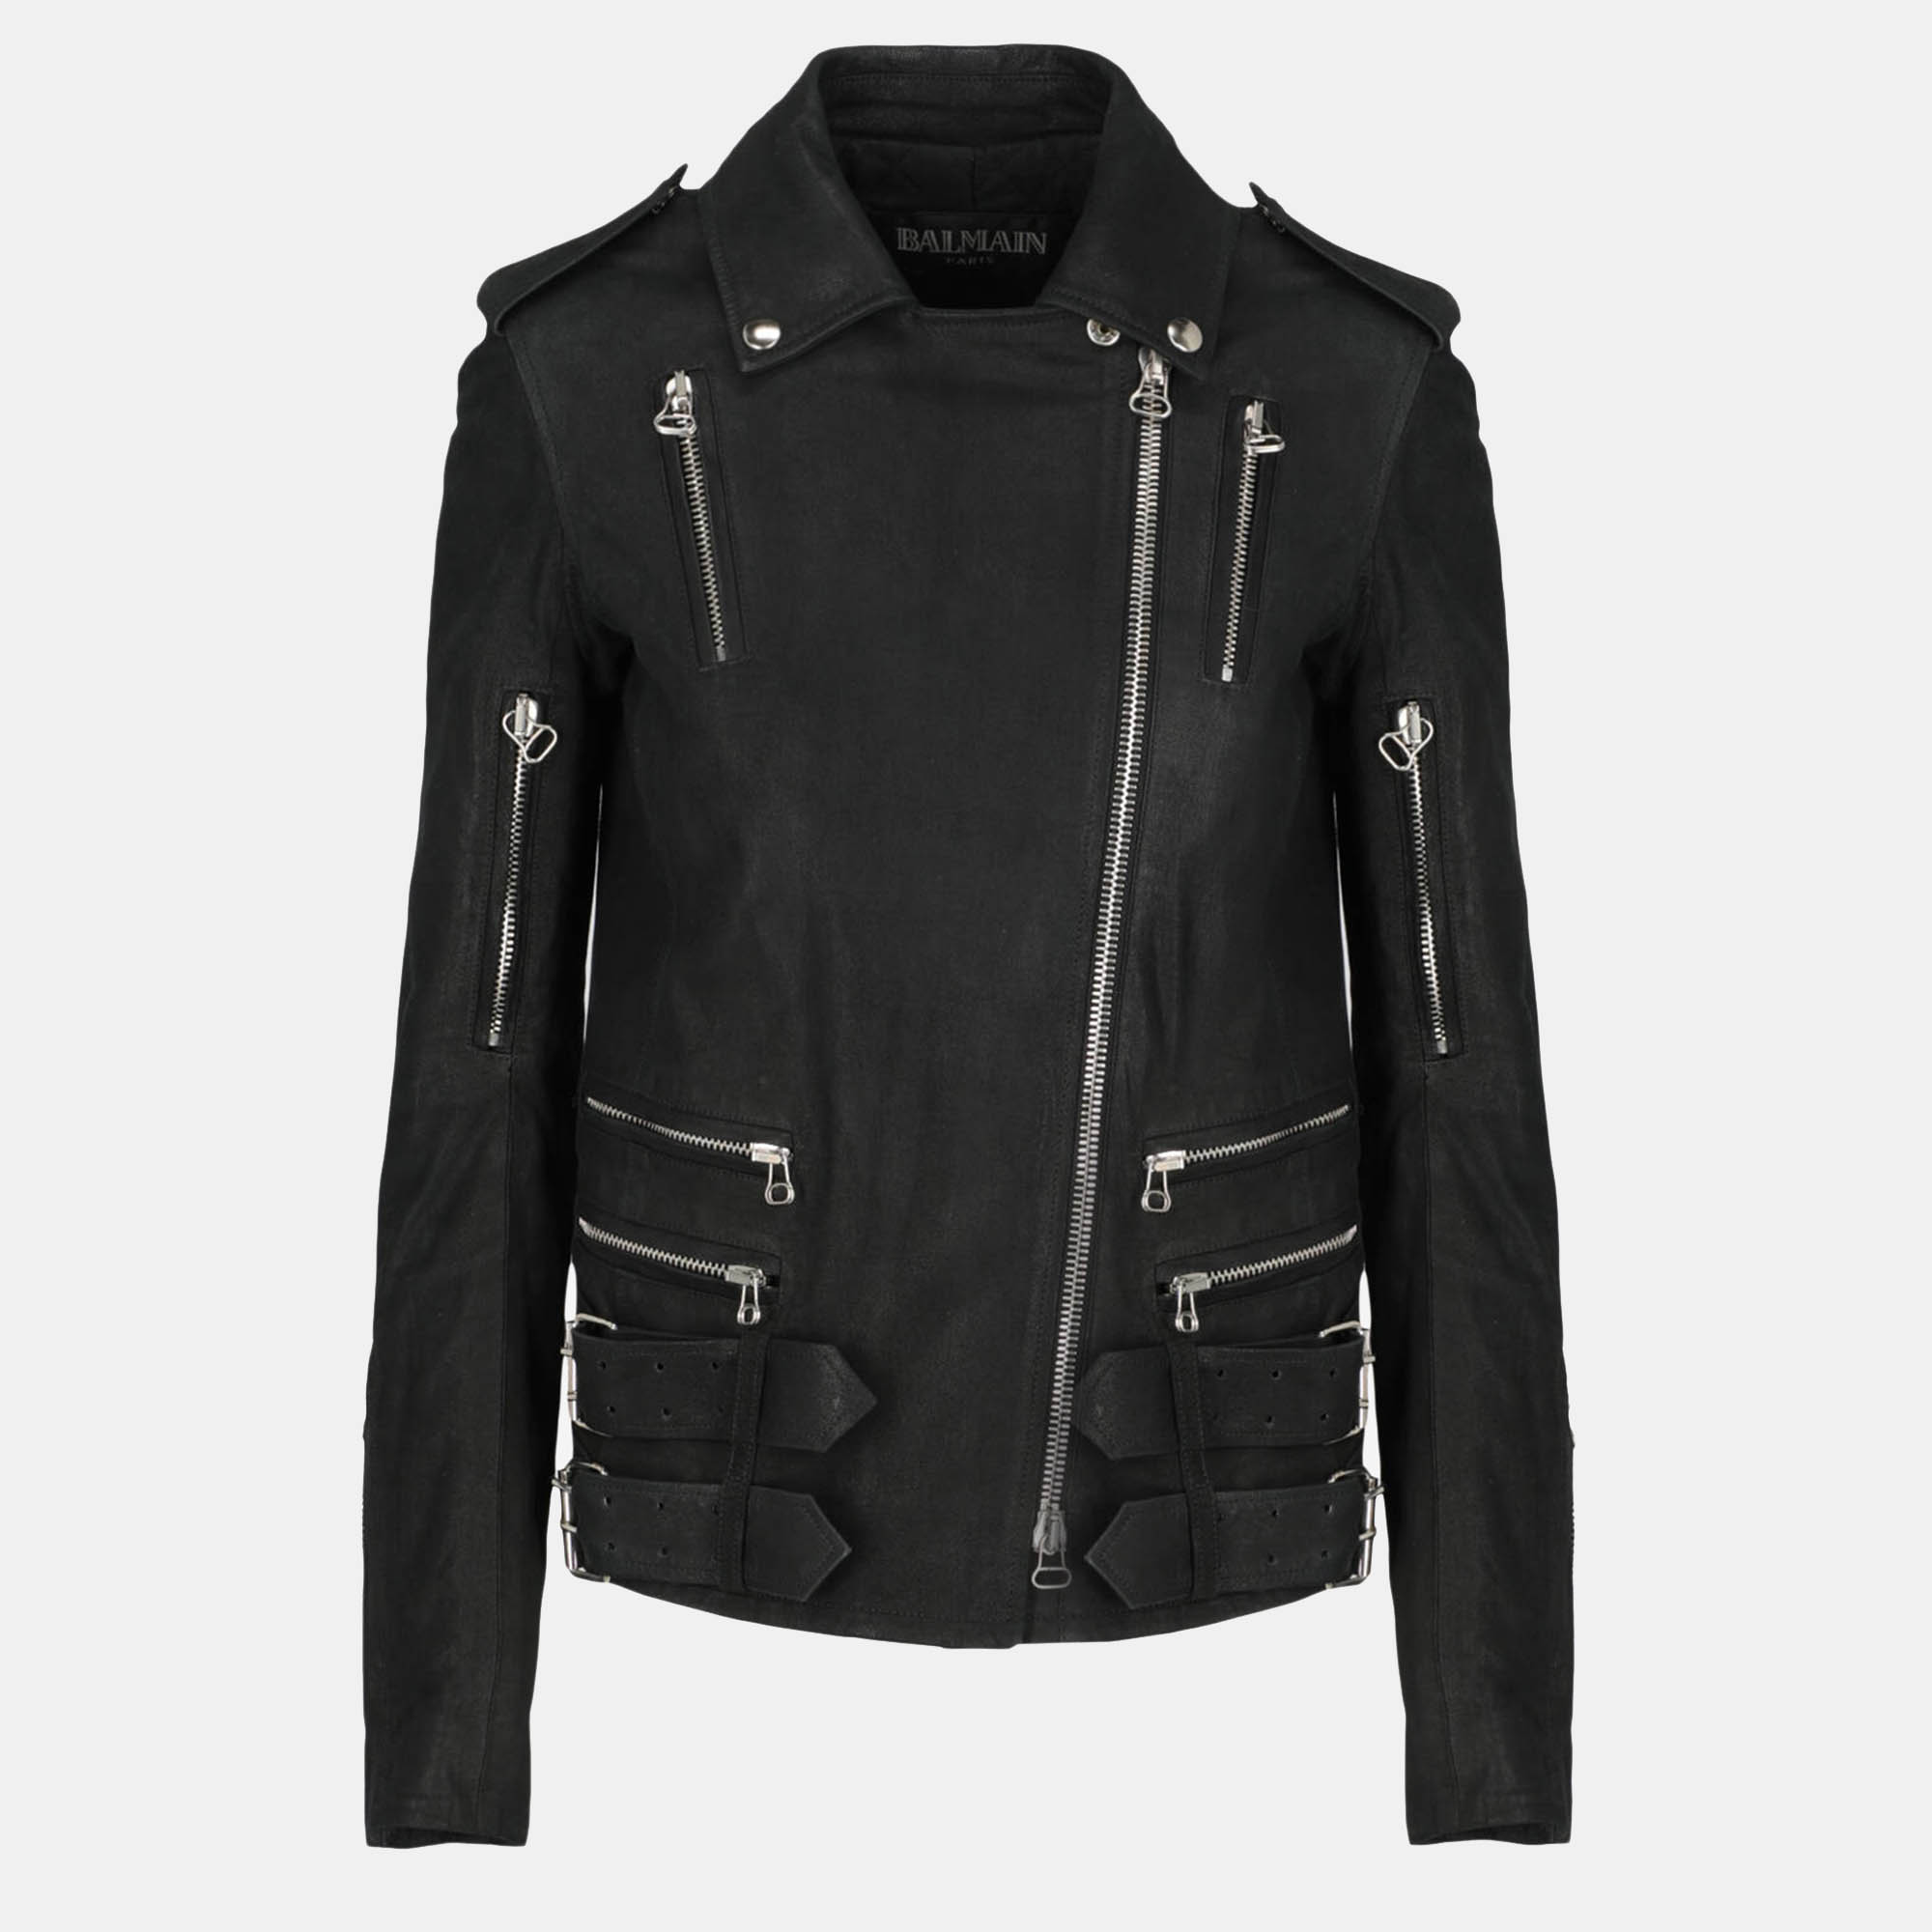 Balmain  Women's Leather Biker Jacket - Black - M